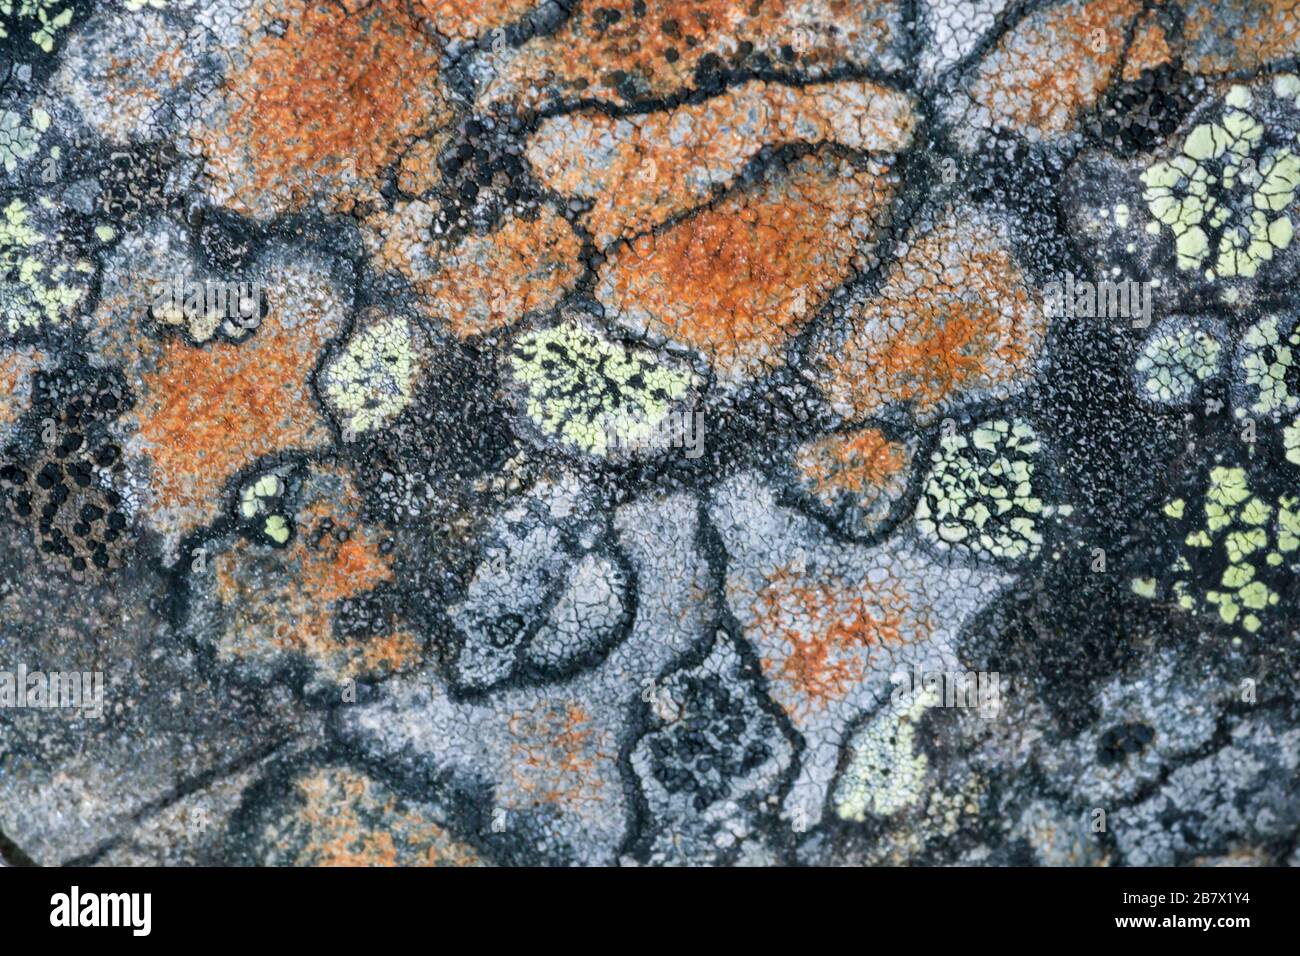 Various lichens growing on granite rock predominantly the Orange of Tremolecia atrata granite in the Highlands of Scotland Stock Photo